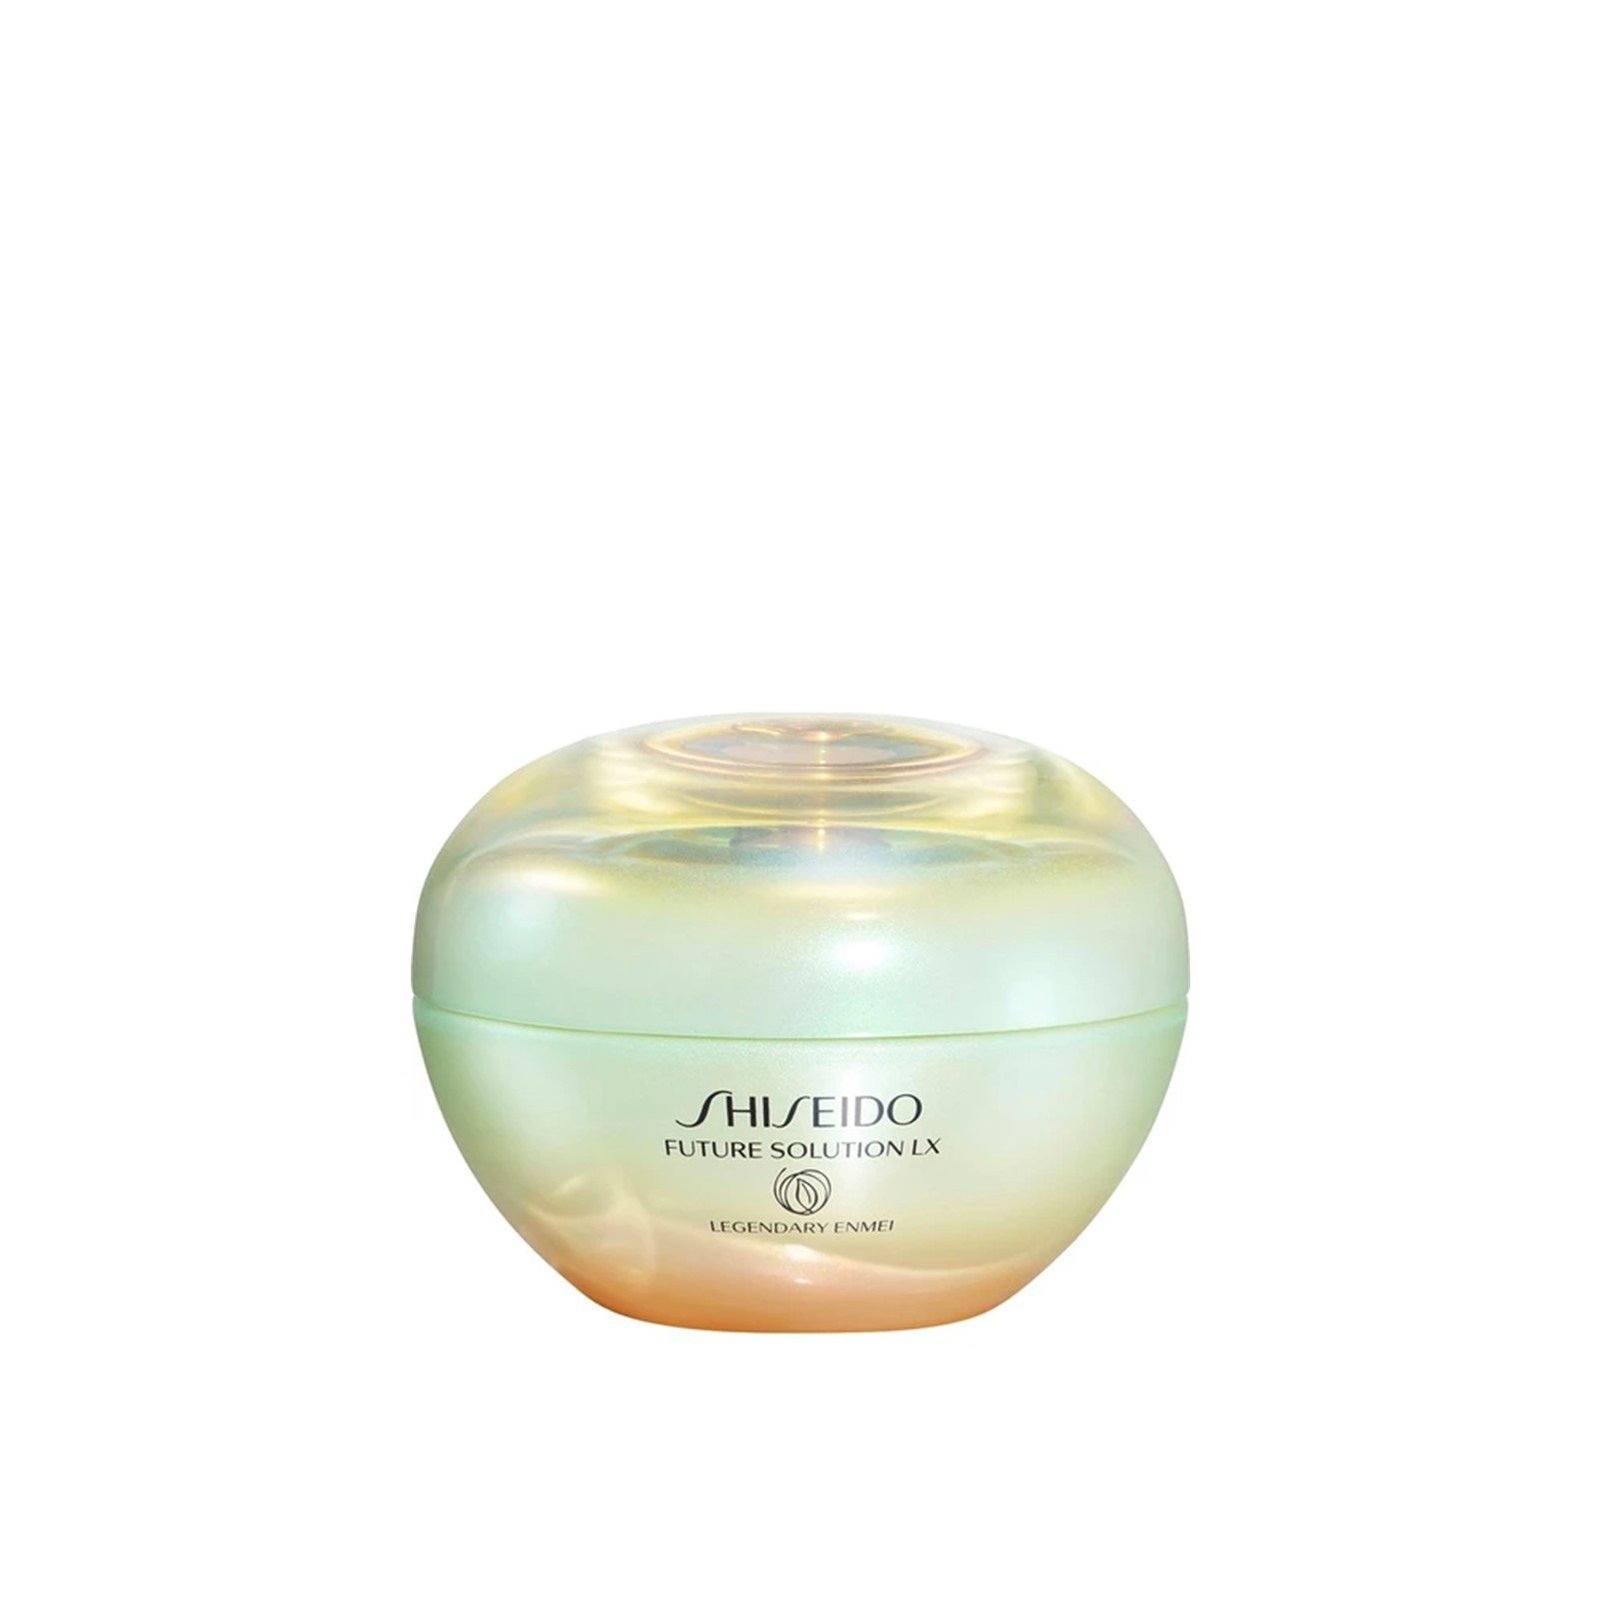 Shiseido Future Solution LX Legendary Enmei Ultimate Renewing Cream 50ml (1.7floz)